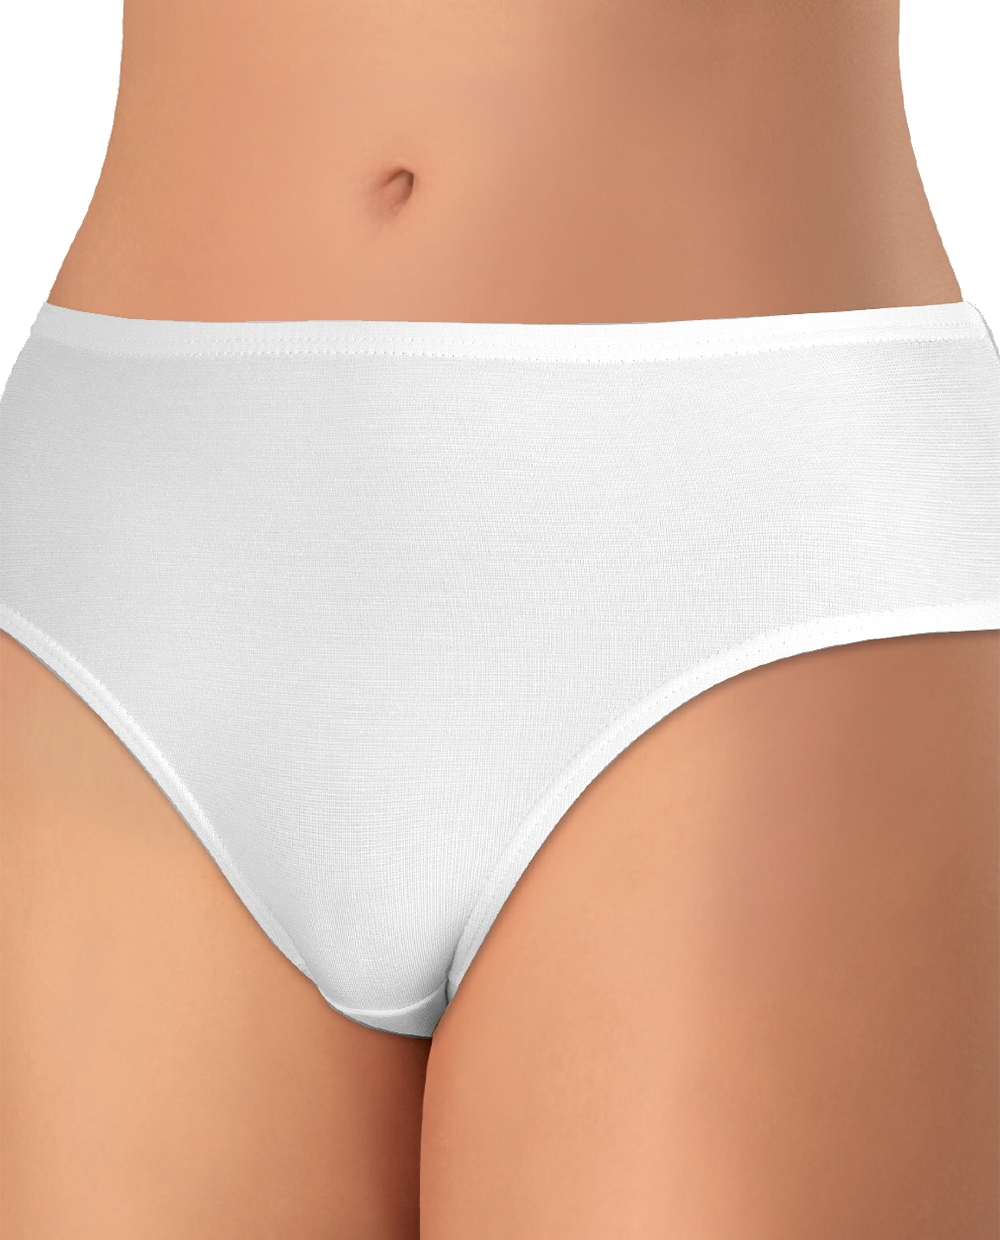 Andrie PS 219 dámské kalhotky Barva: bílá, Velikost: XL